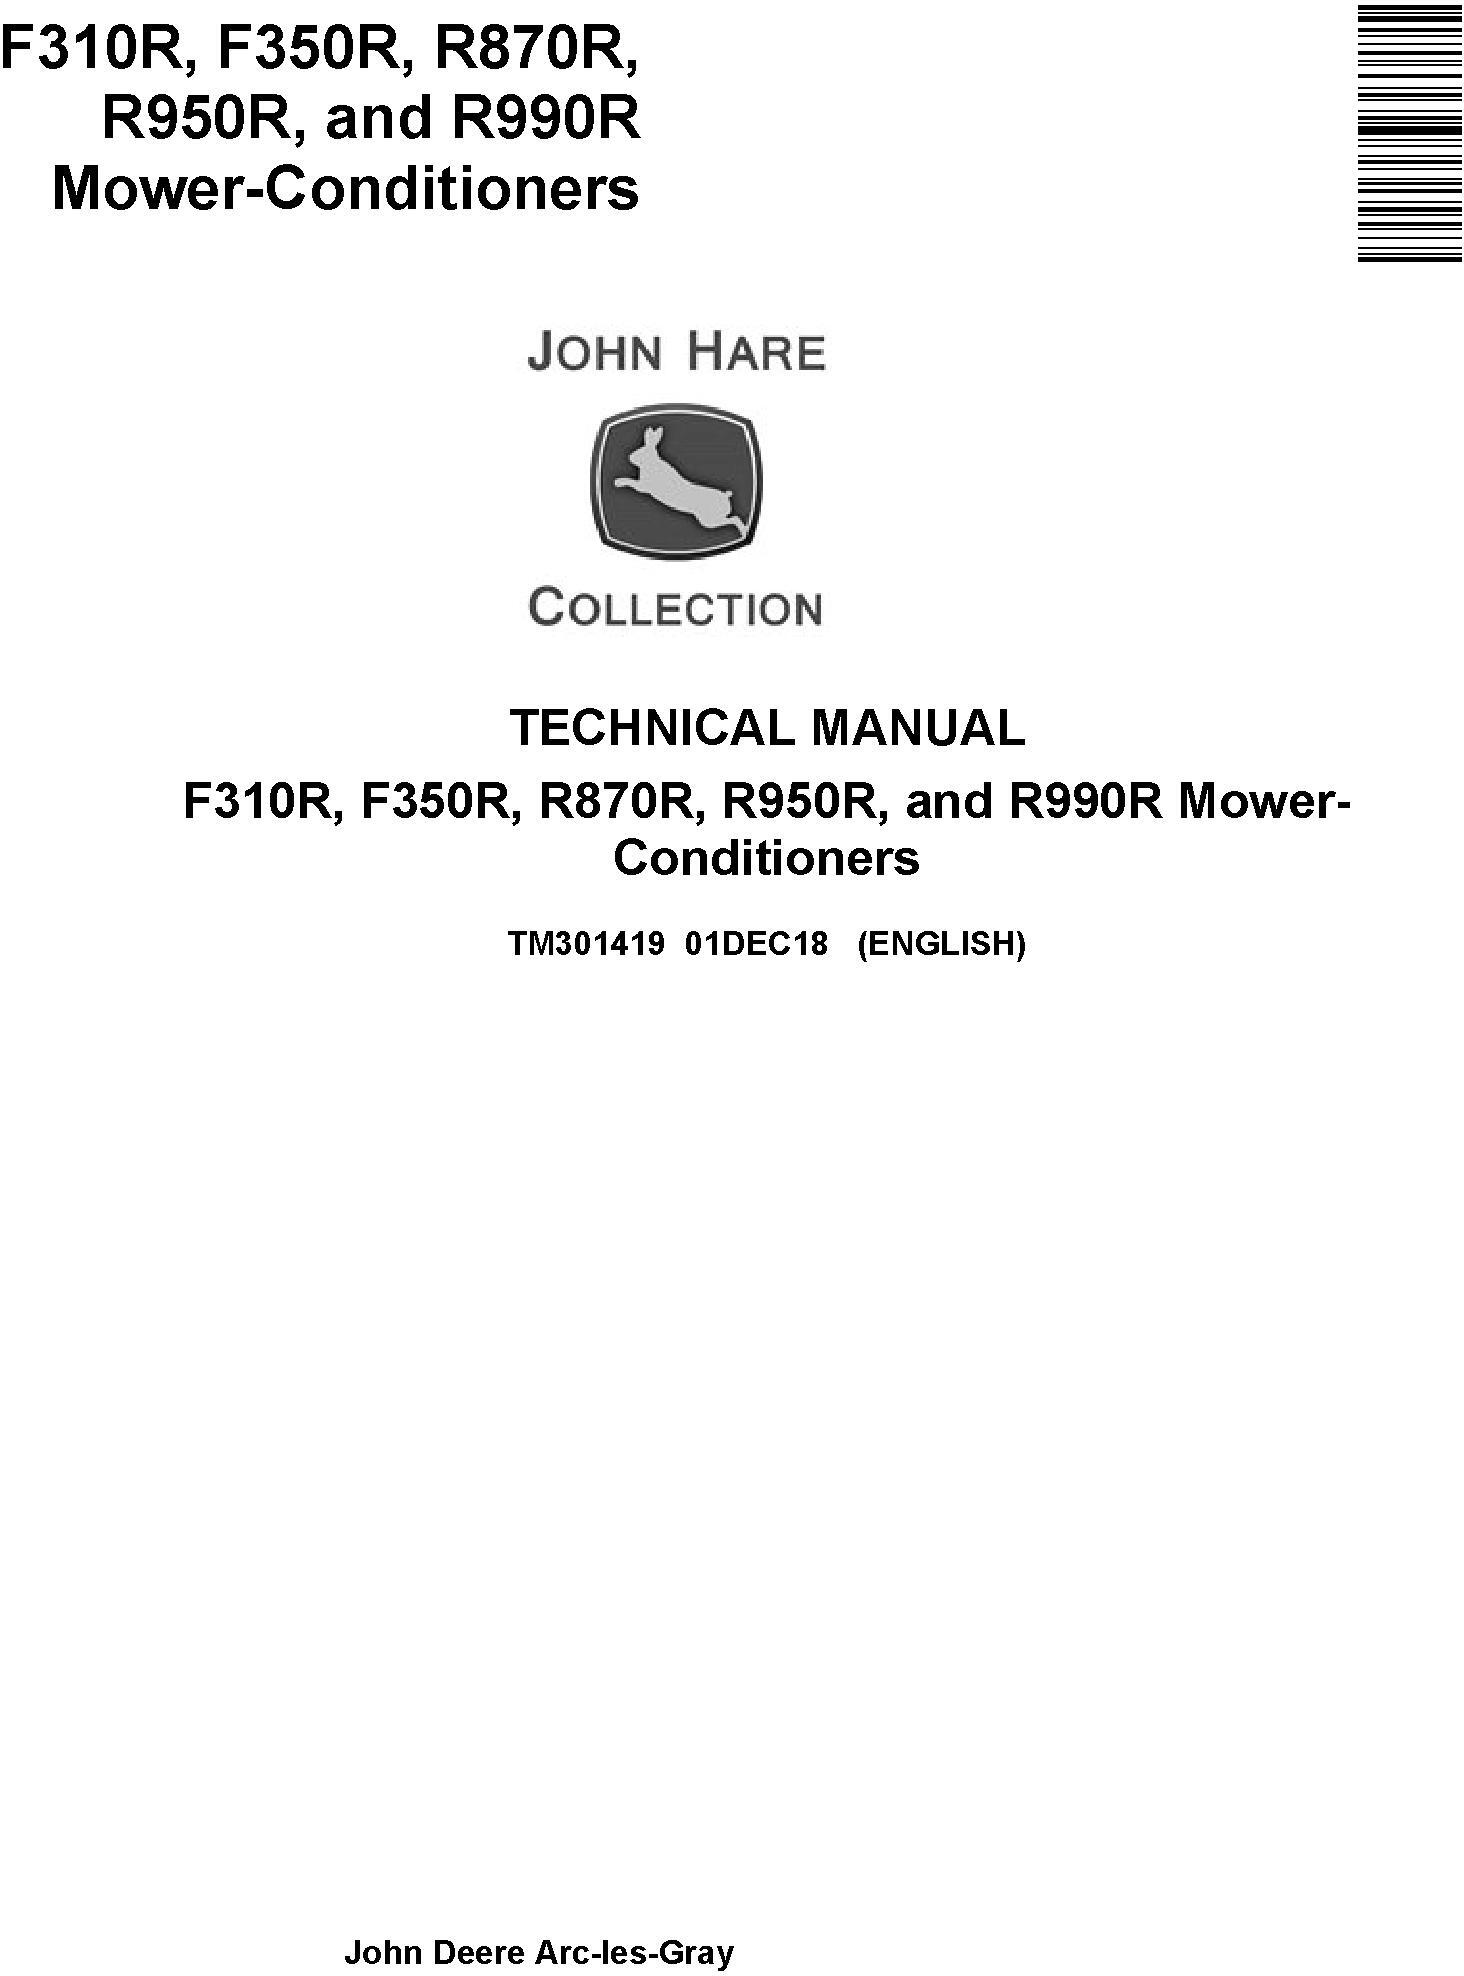 John Deere F310R, F350R, R870R, R950R and R990R Mower-Conditioners Technical Manual (TM301419) - 19292